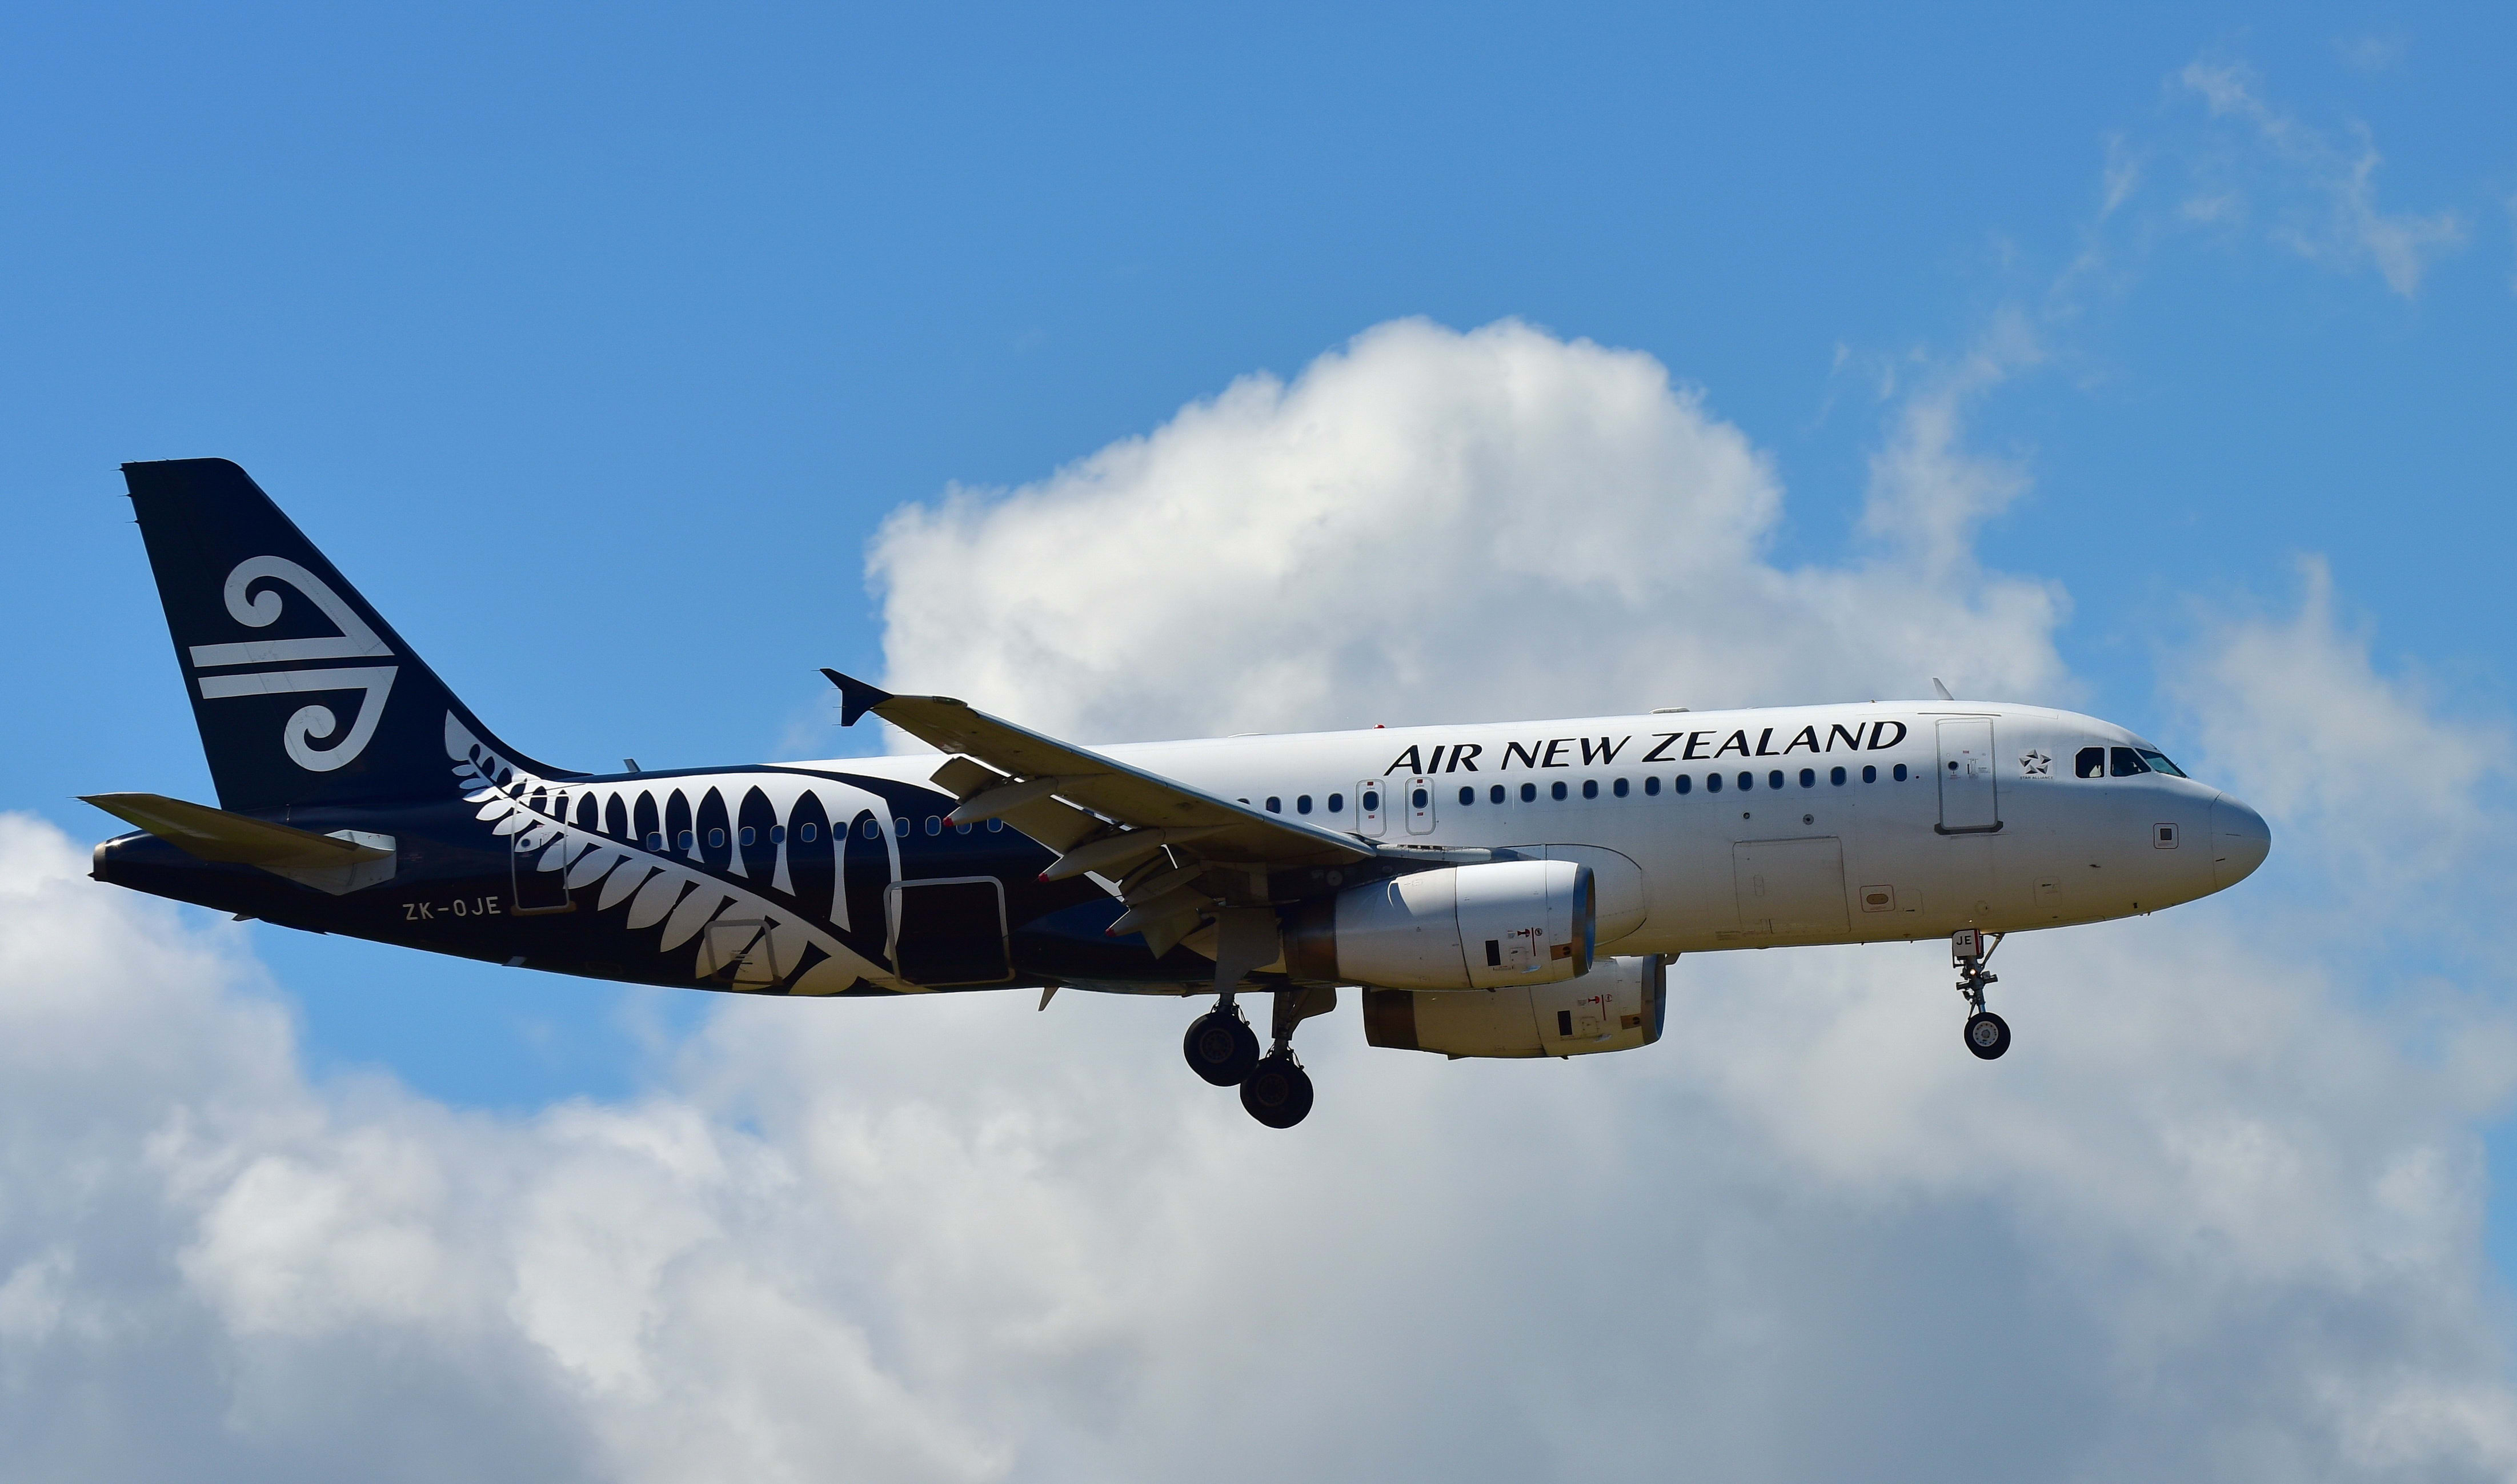 Air New Zealand Airbus A320 landing at Auckland International Airport.